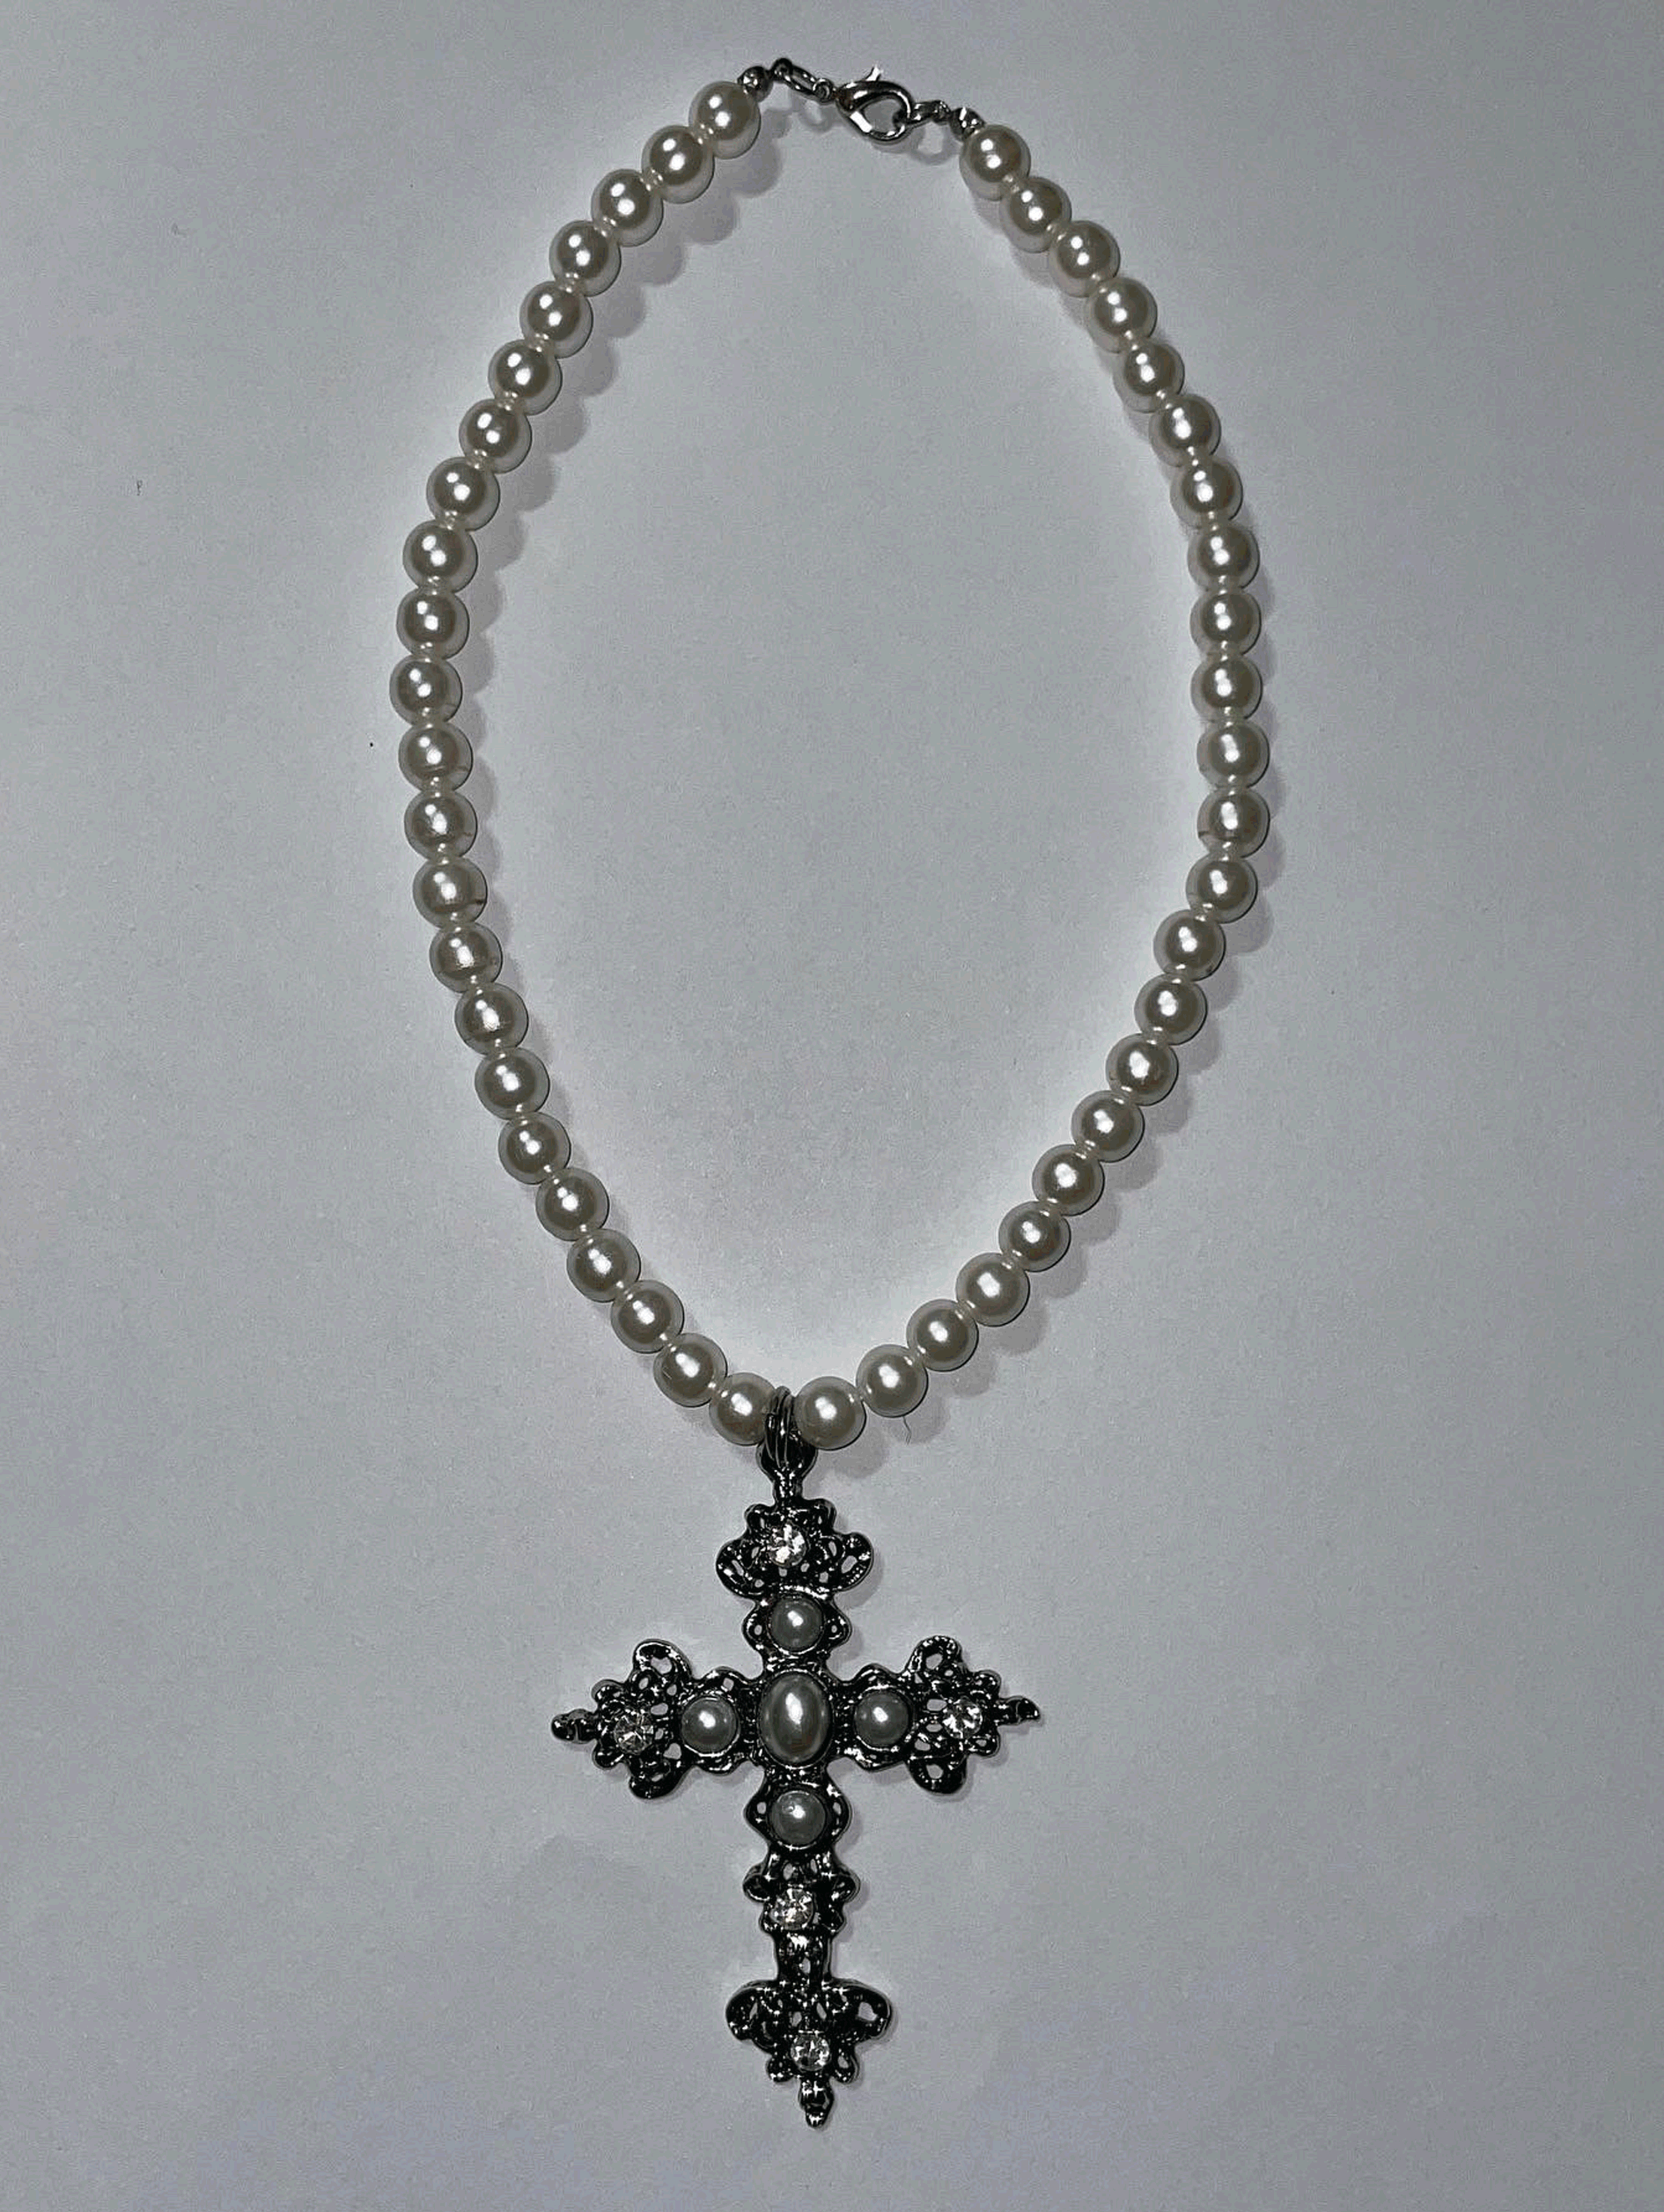 Big cross necklace